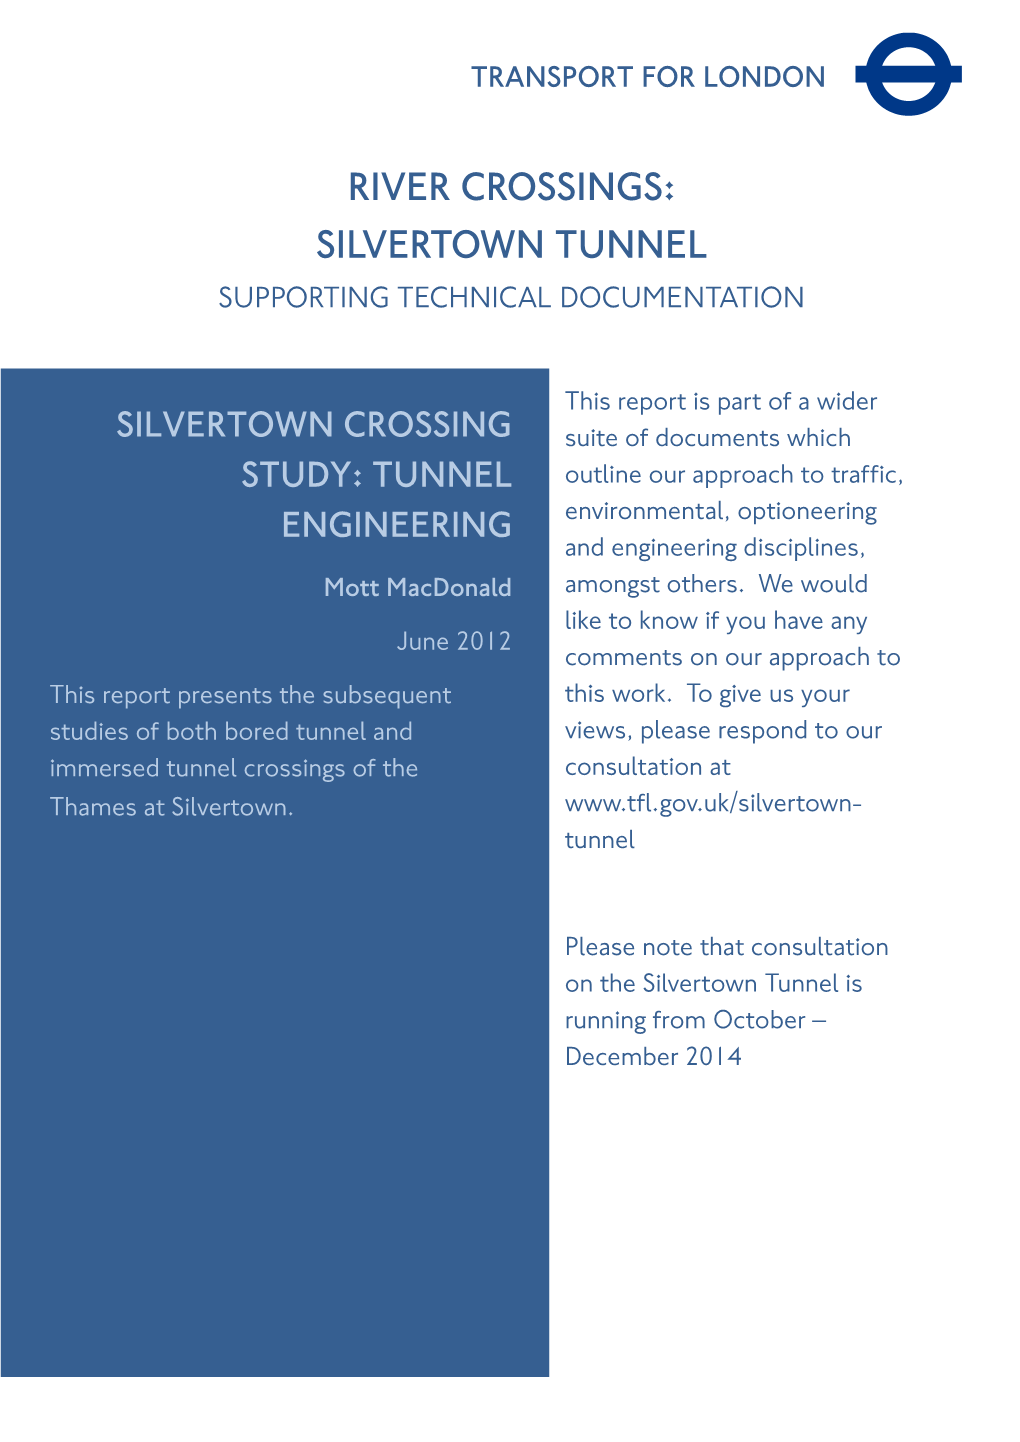 Silvertown Crossing Study